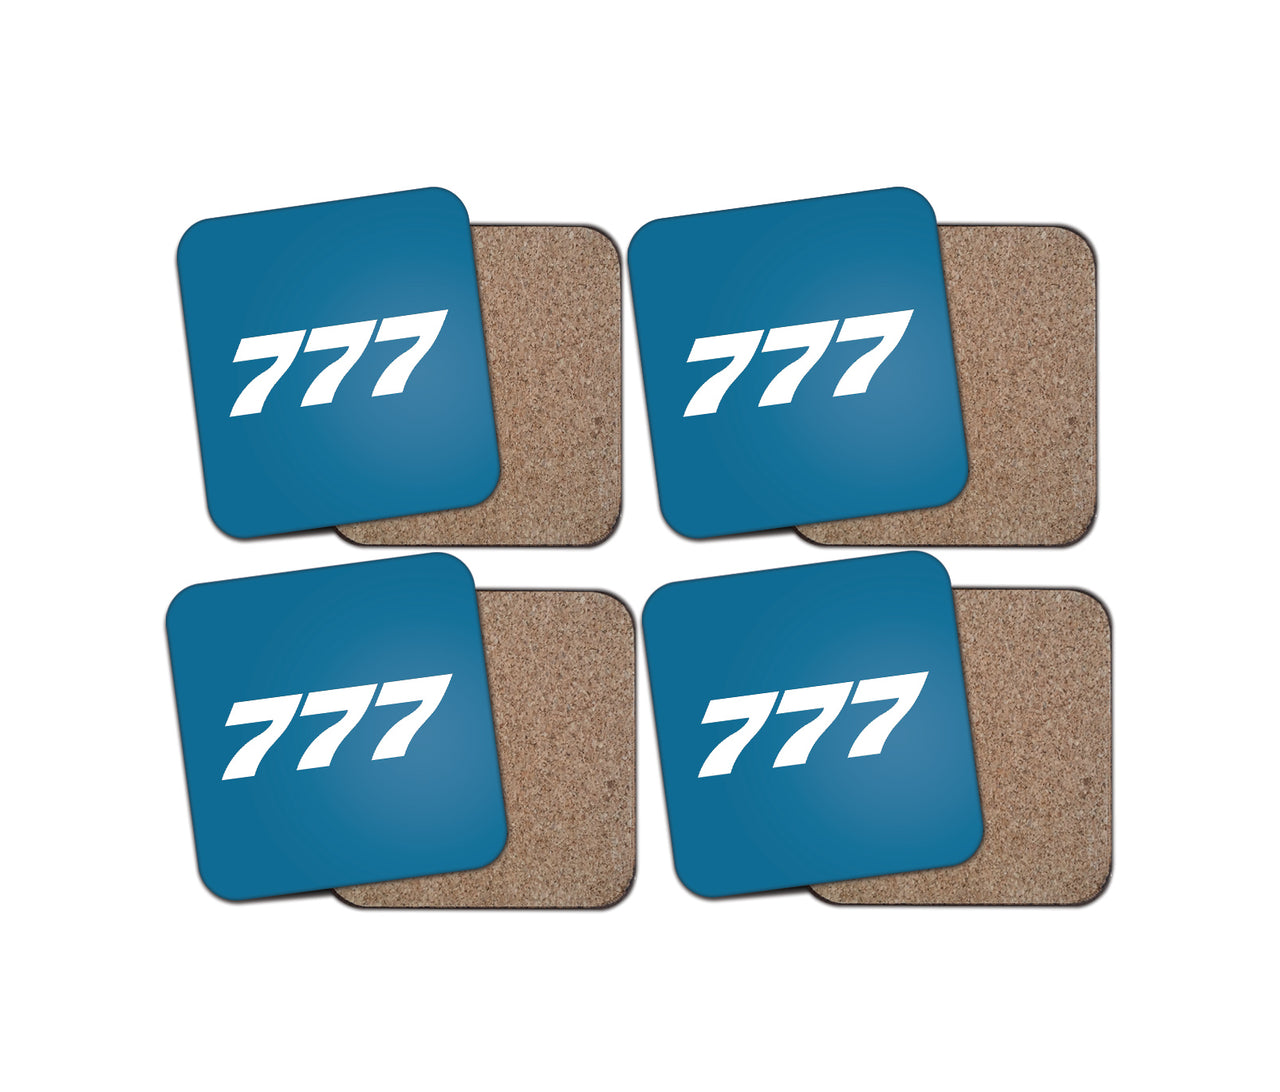 777 Flat Text Designed Coasters